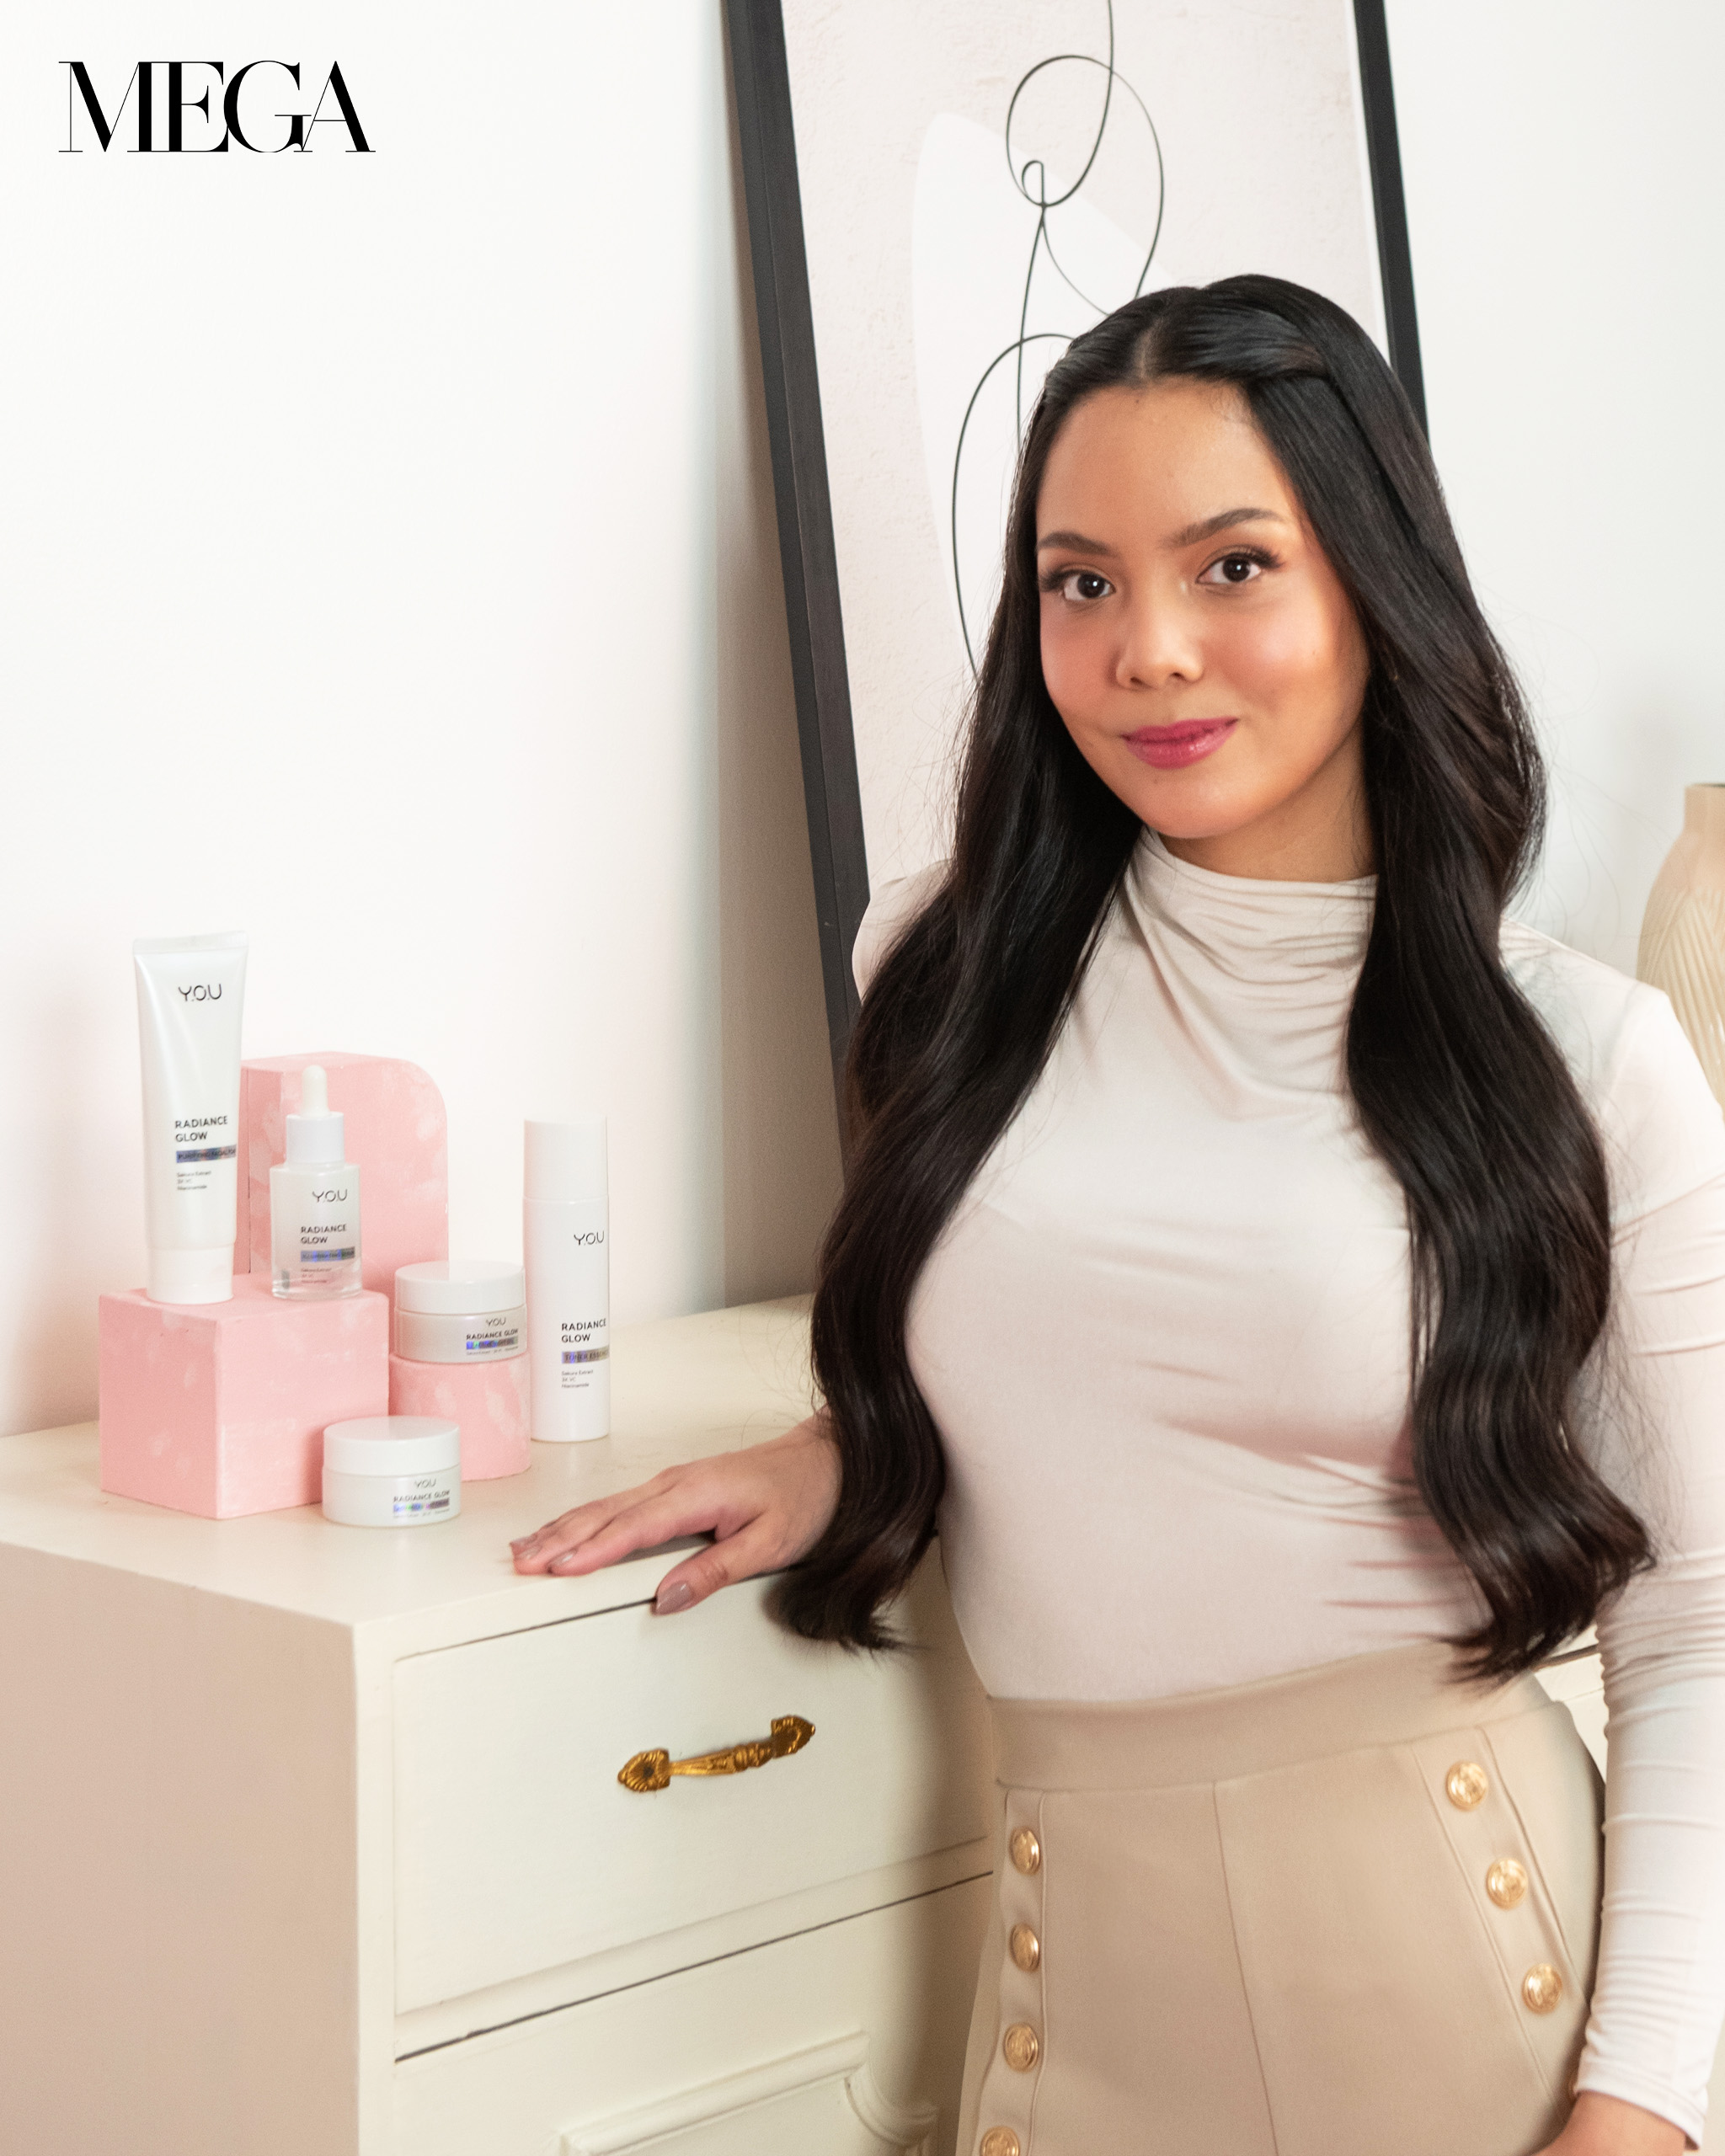 Y.O.U Beauty's Product Manager, Jennika Casin